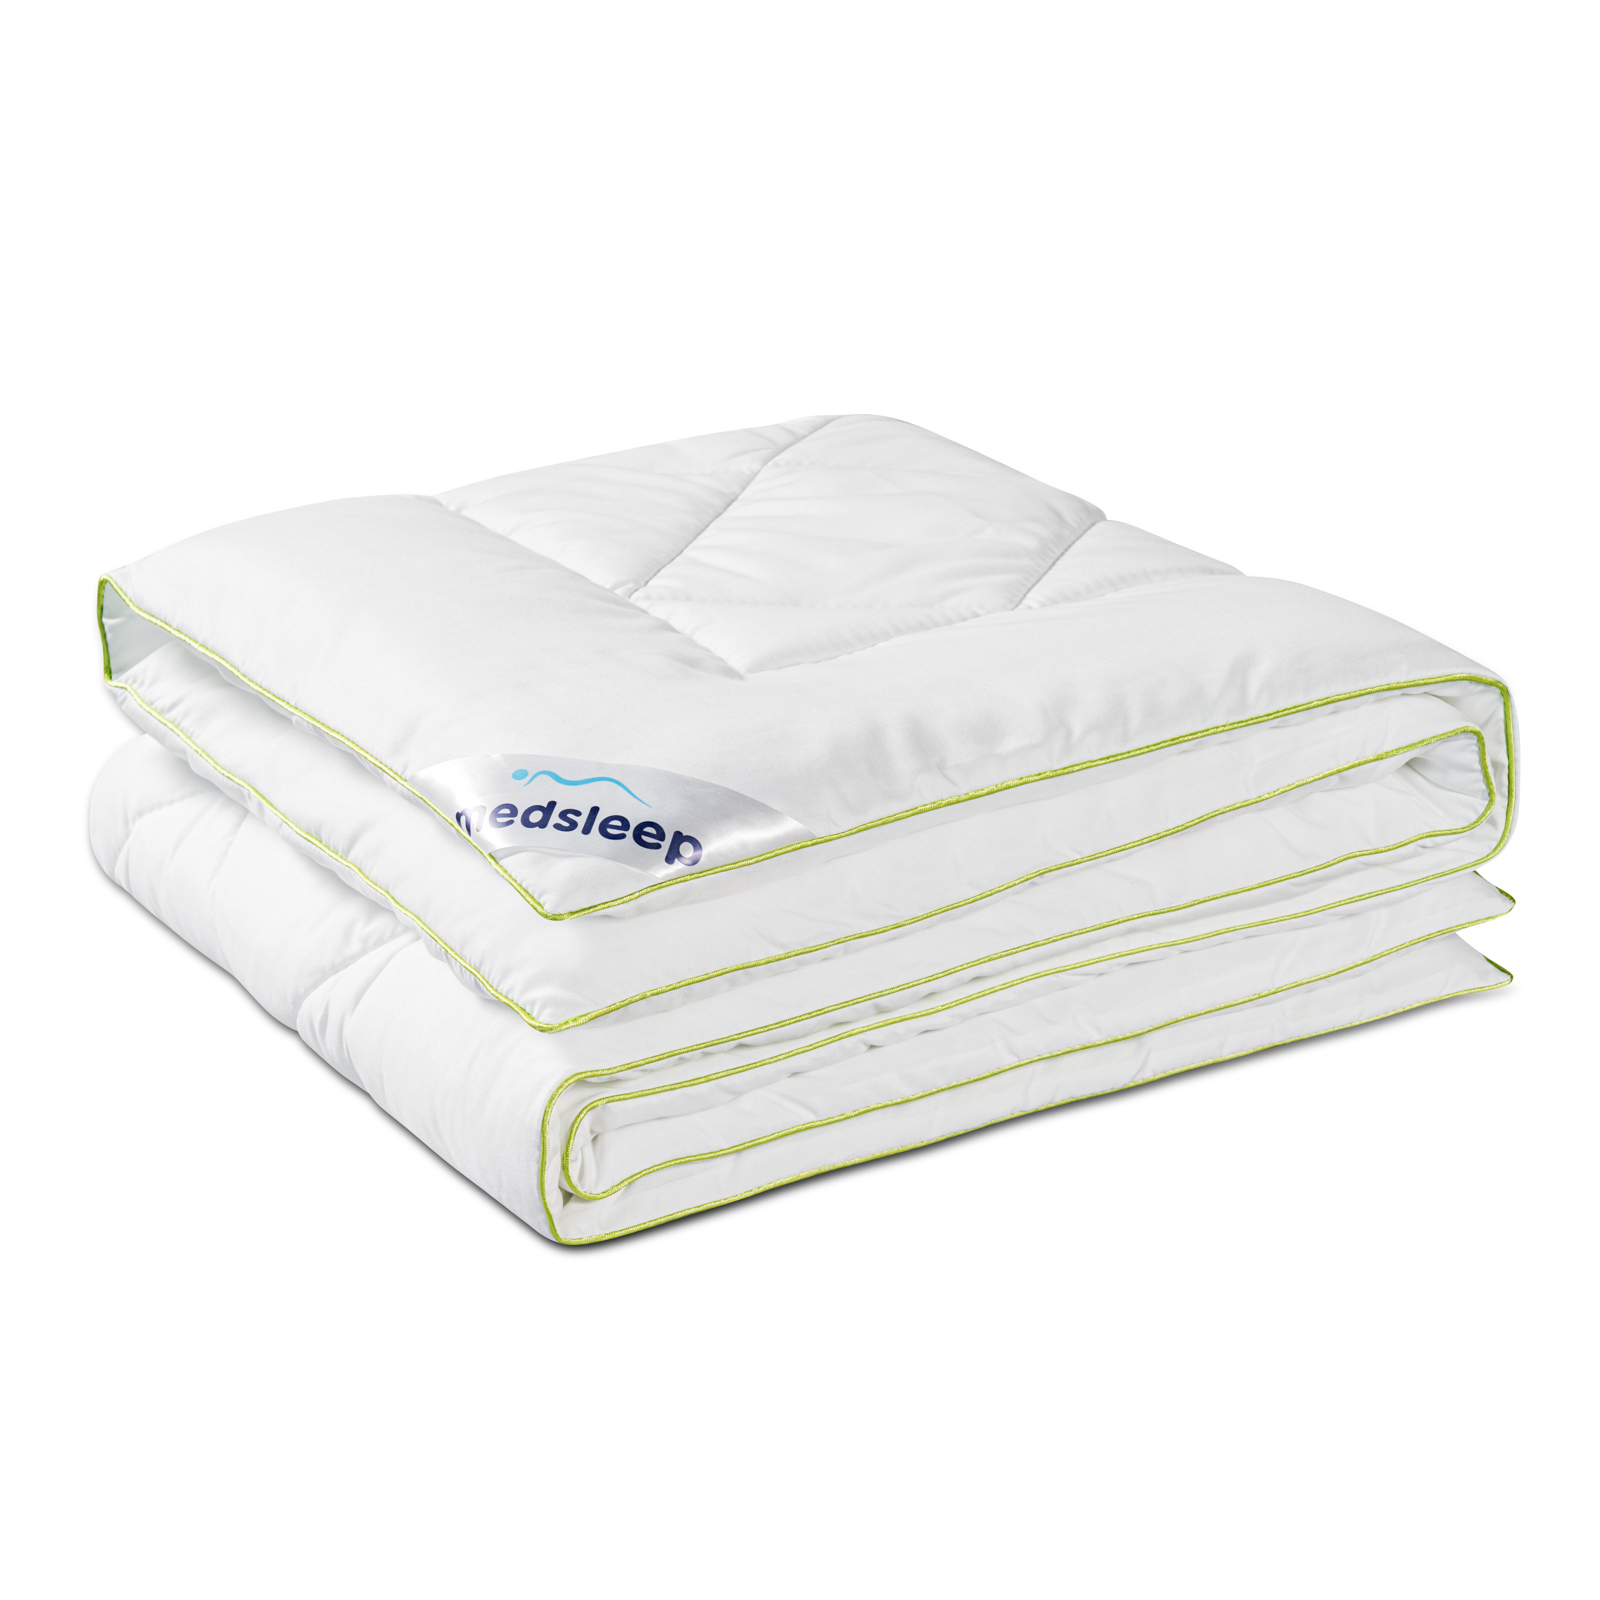 Одеяло Medsleep Dao белое 110х140 см одеяло medsleep nubi белое 175х200 см